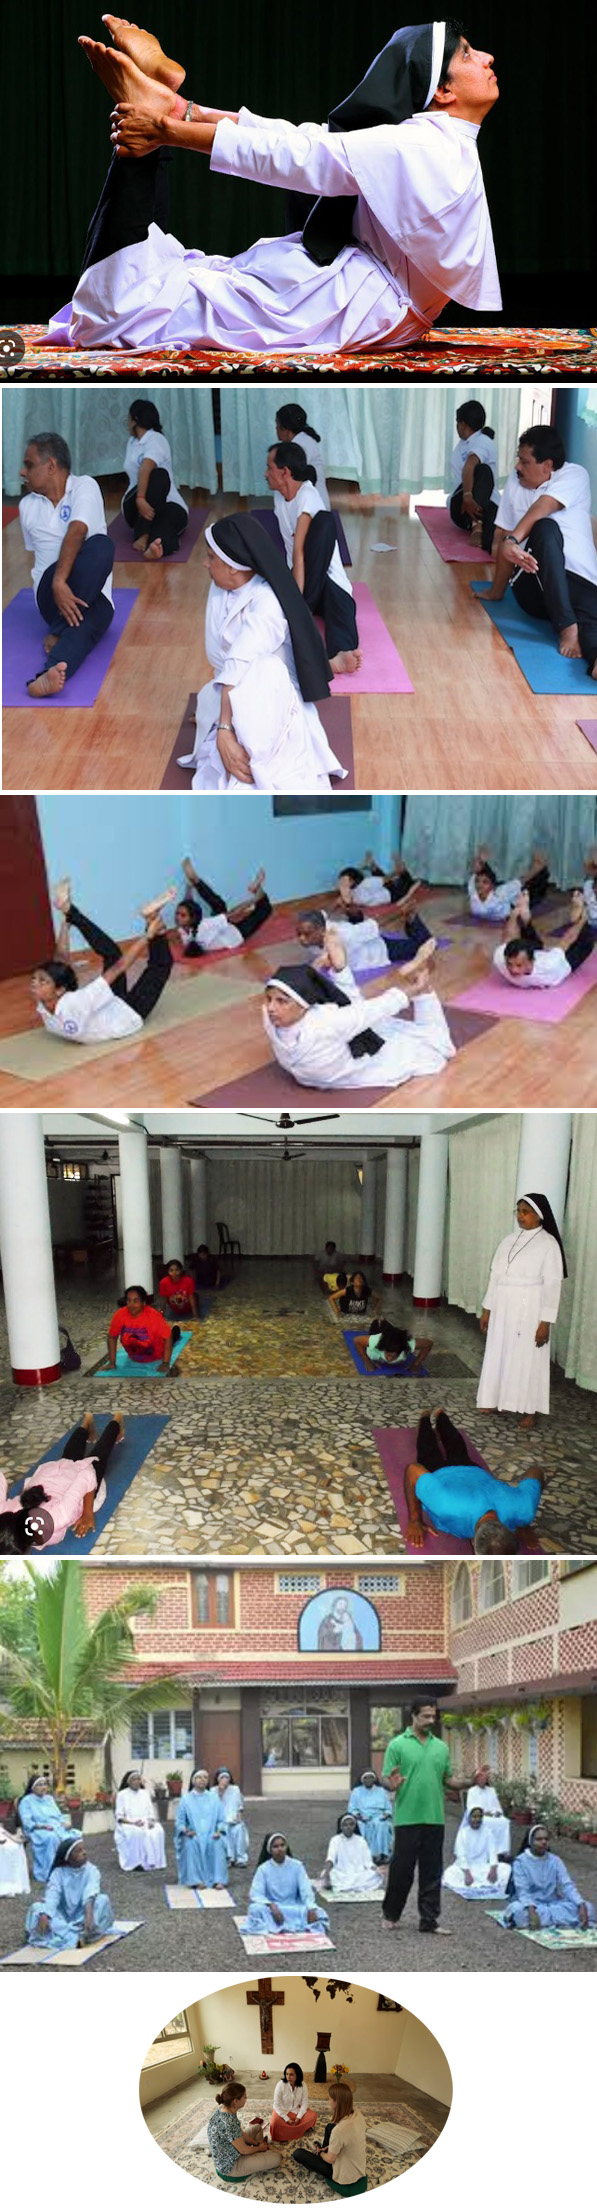 Catholic nun teaches yoga 2